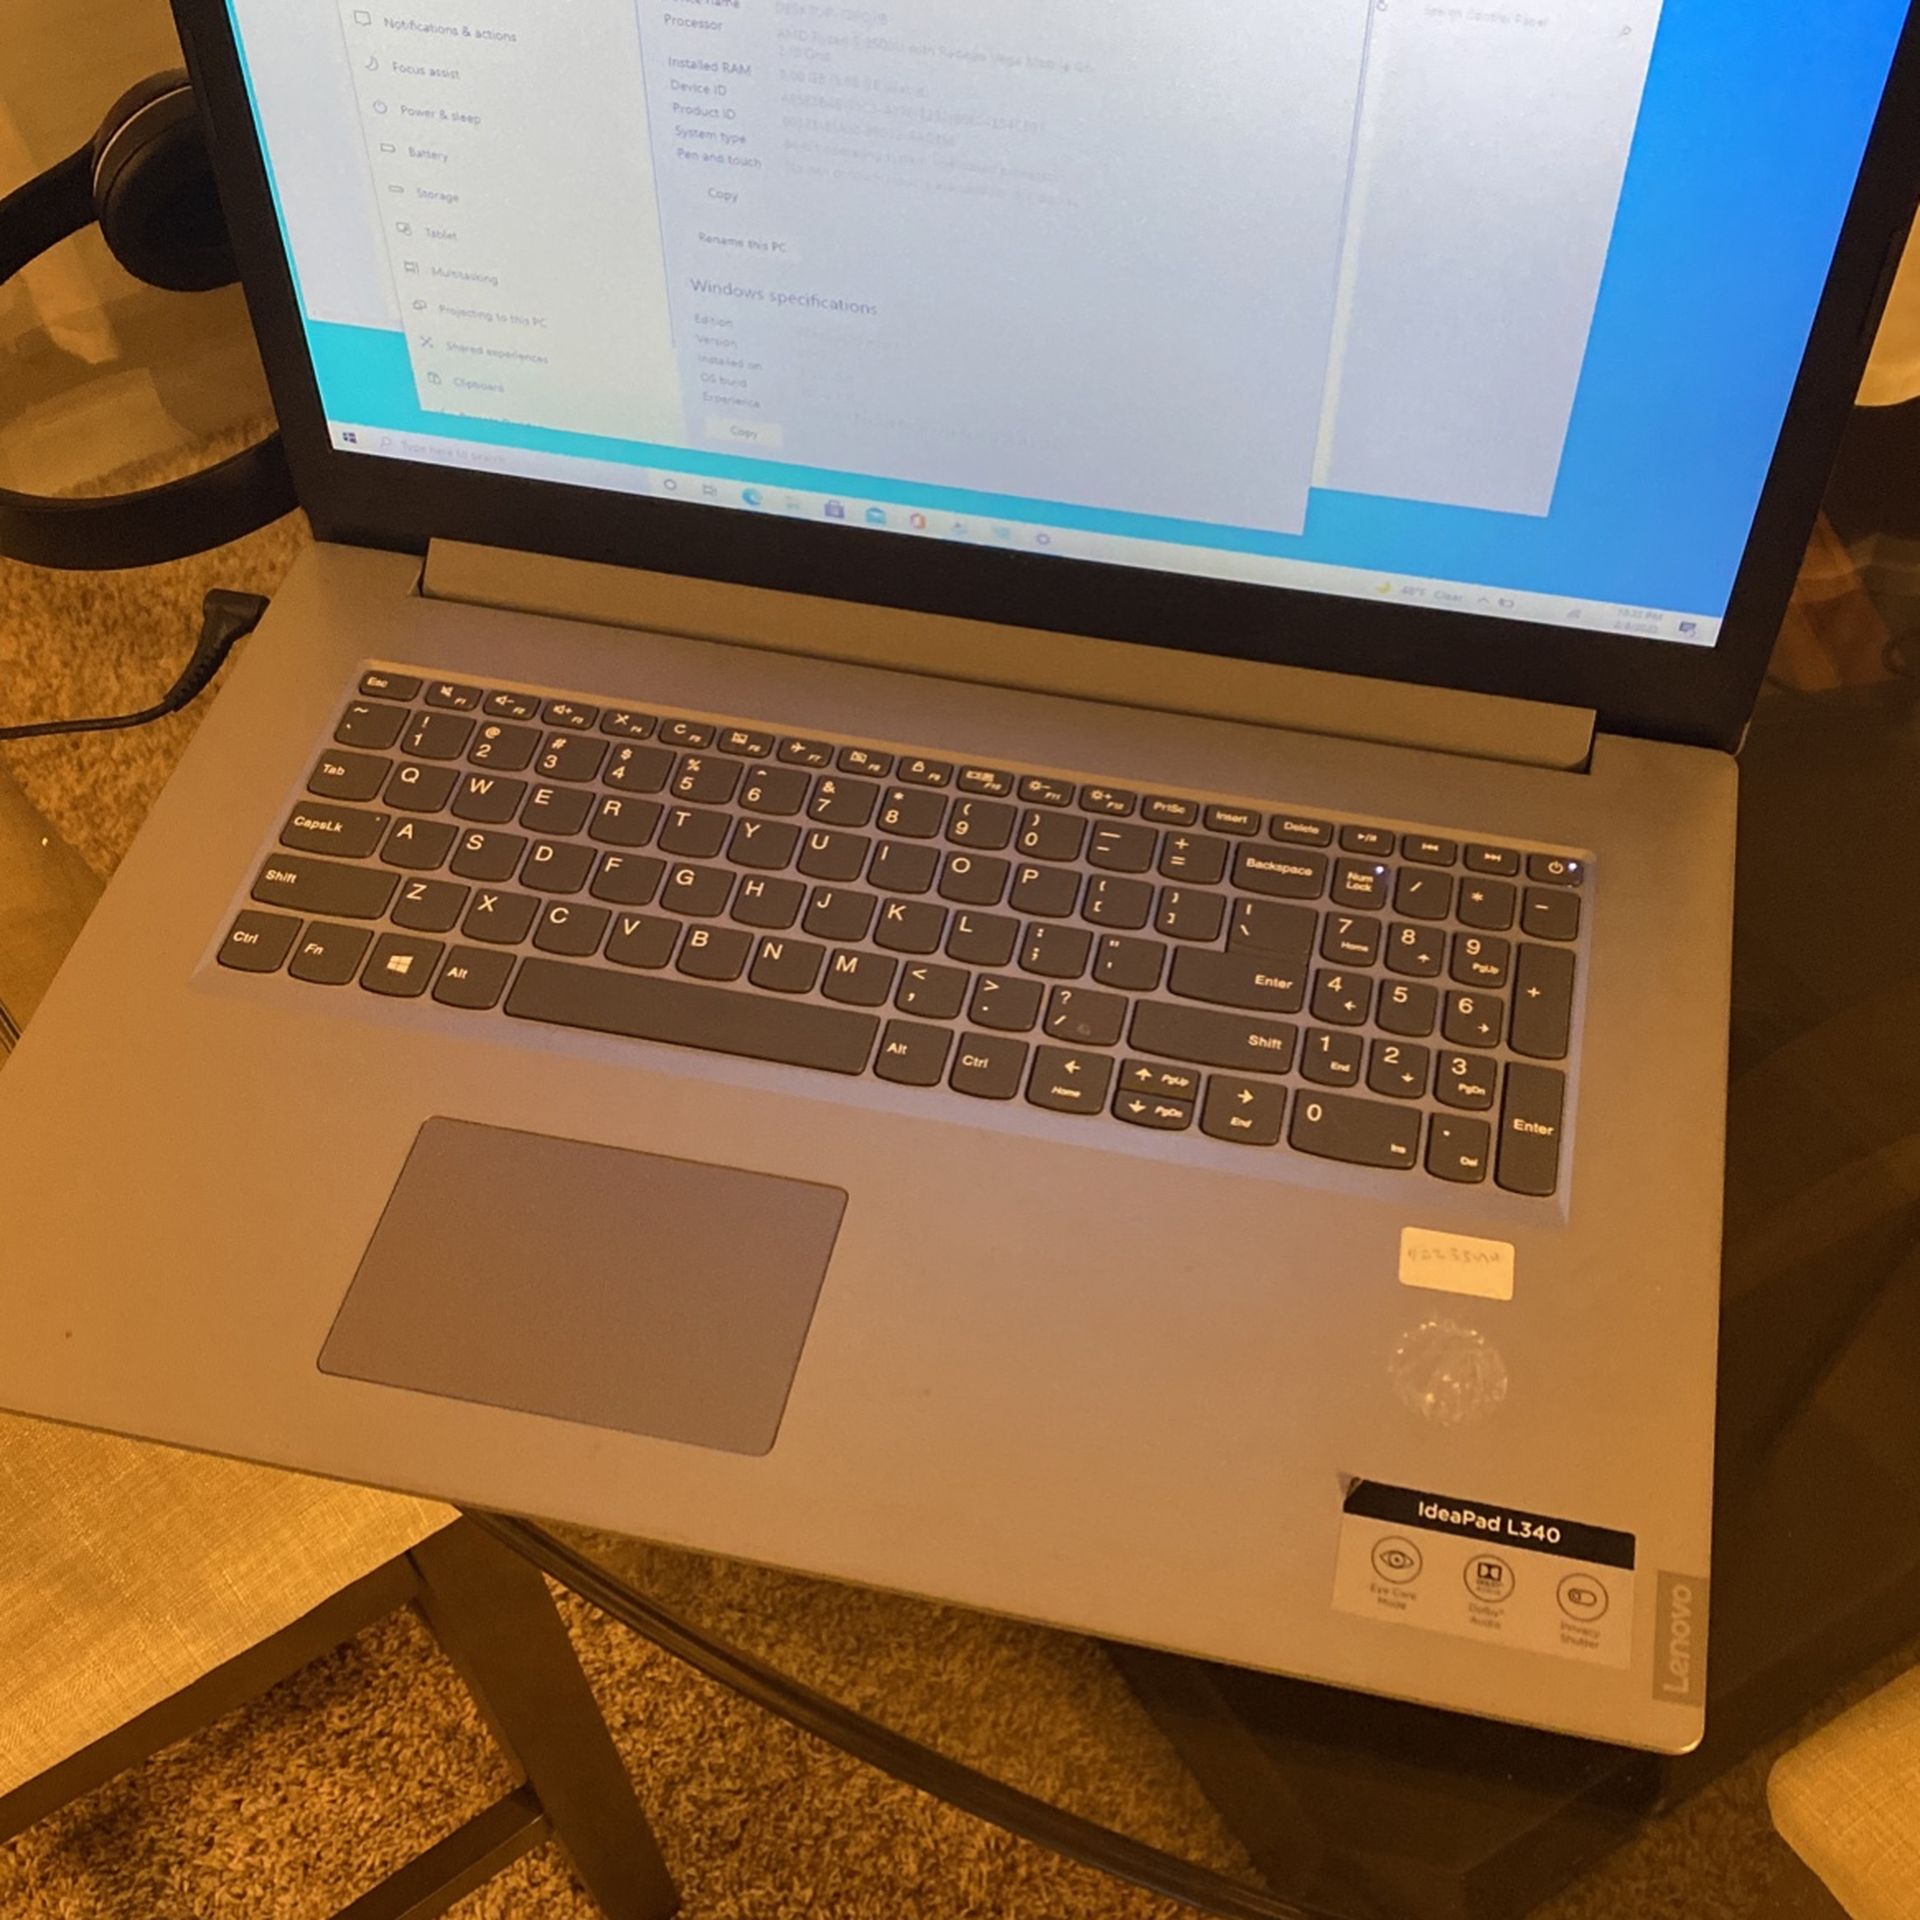 Lenovo Ideapad L340 (8gb) Ram Gaming Laptop! Barely Used